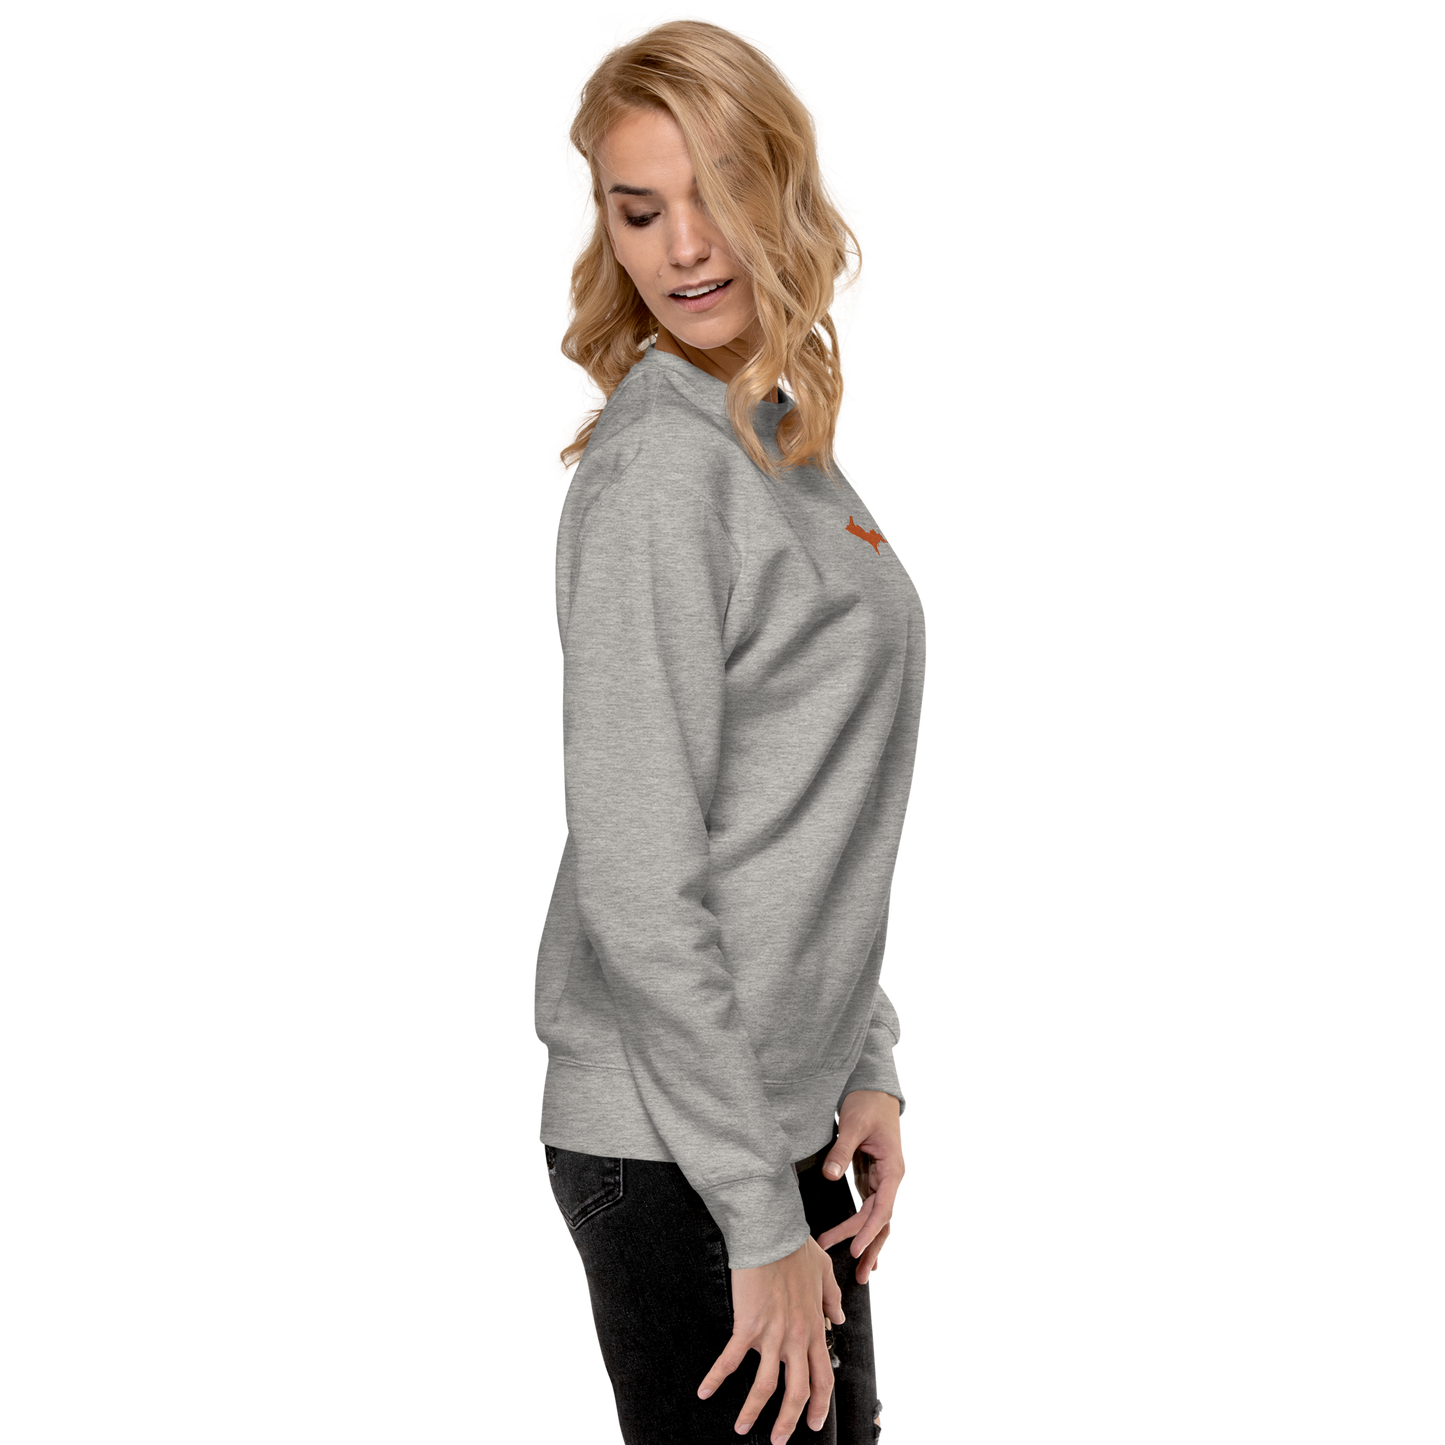 Michigan Upper Peninsula Sweatshirt (w/ Embroidered Orange UP Outline) | Unisex Premium